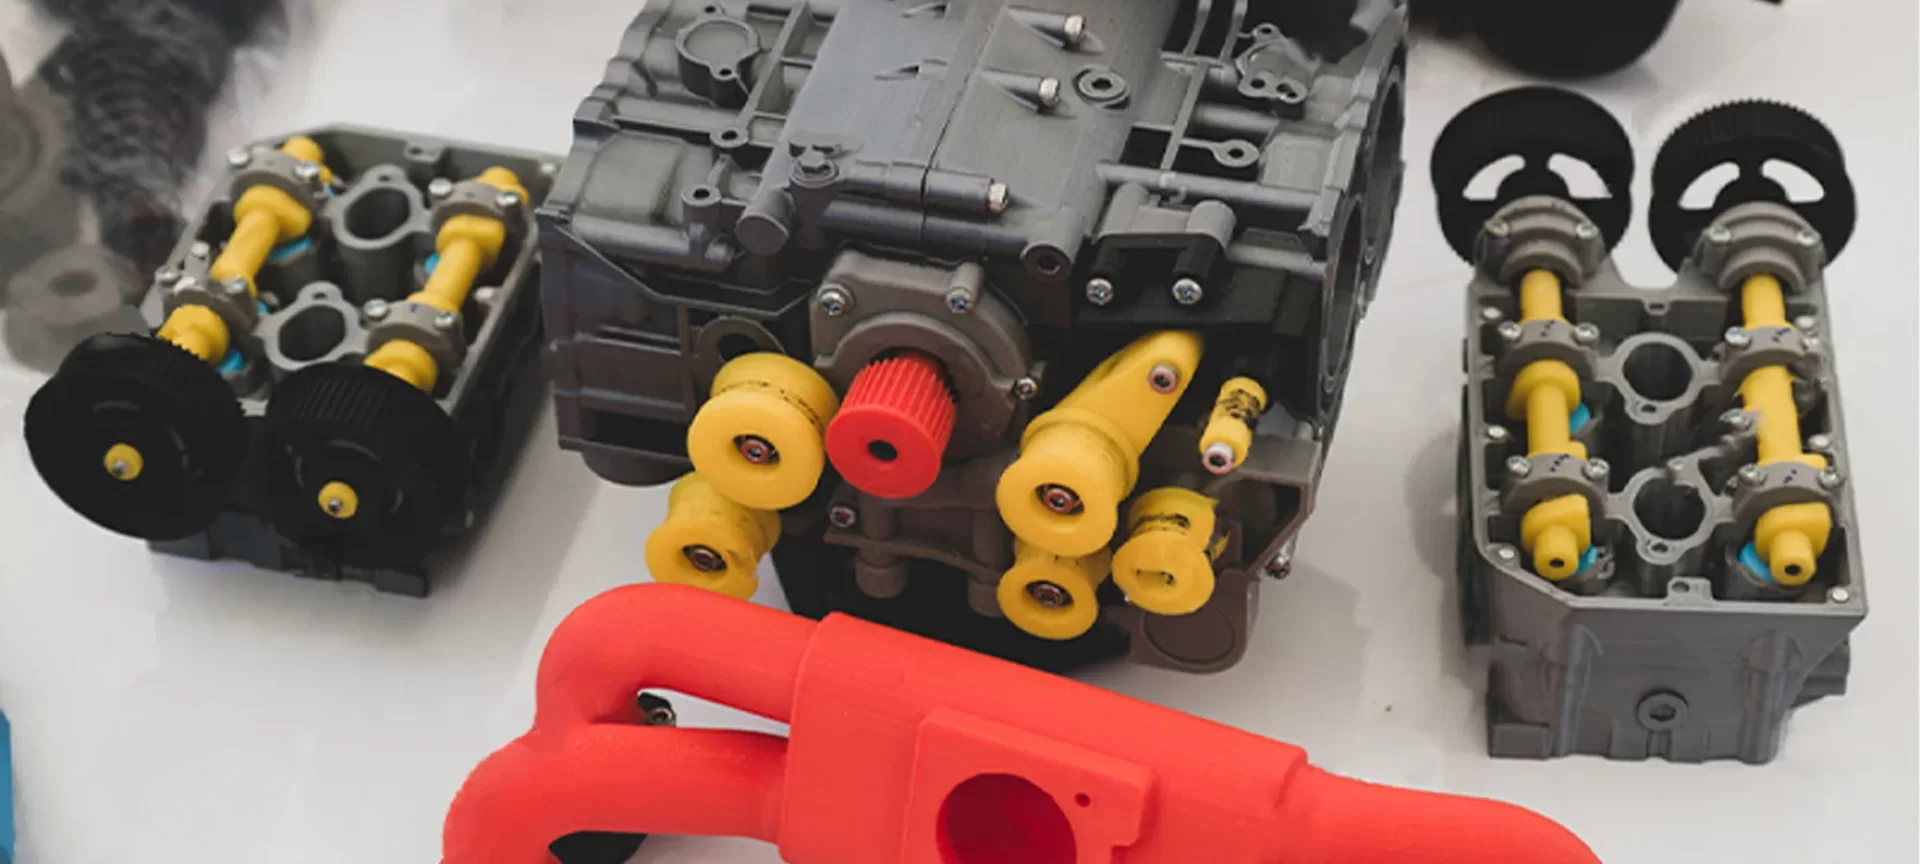 3D printed car engine